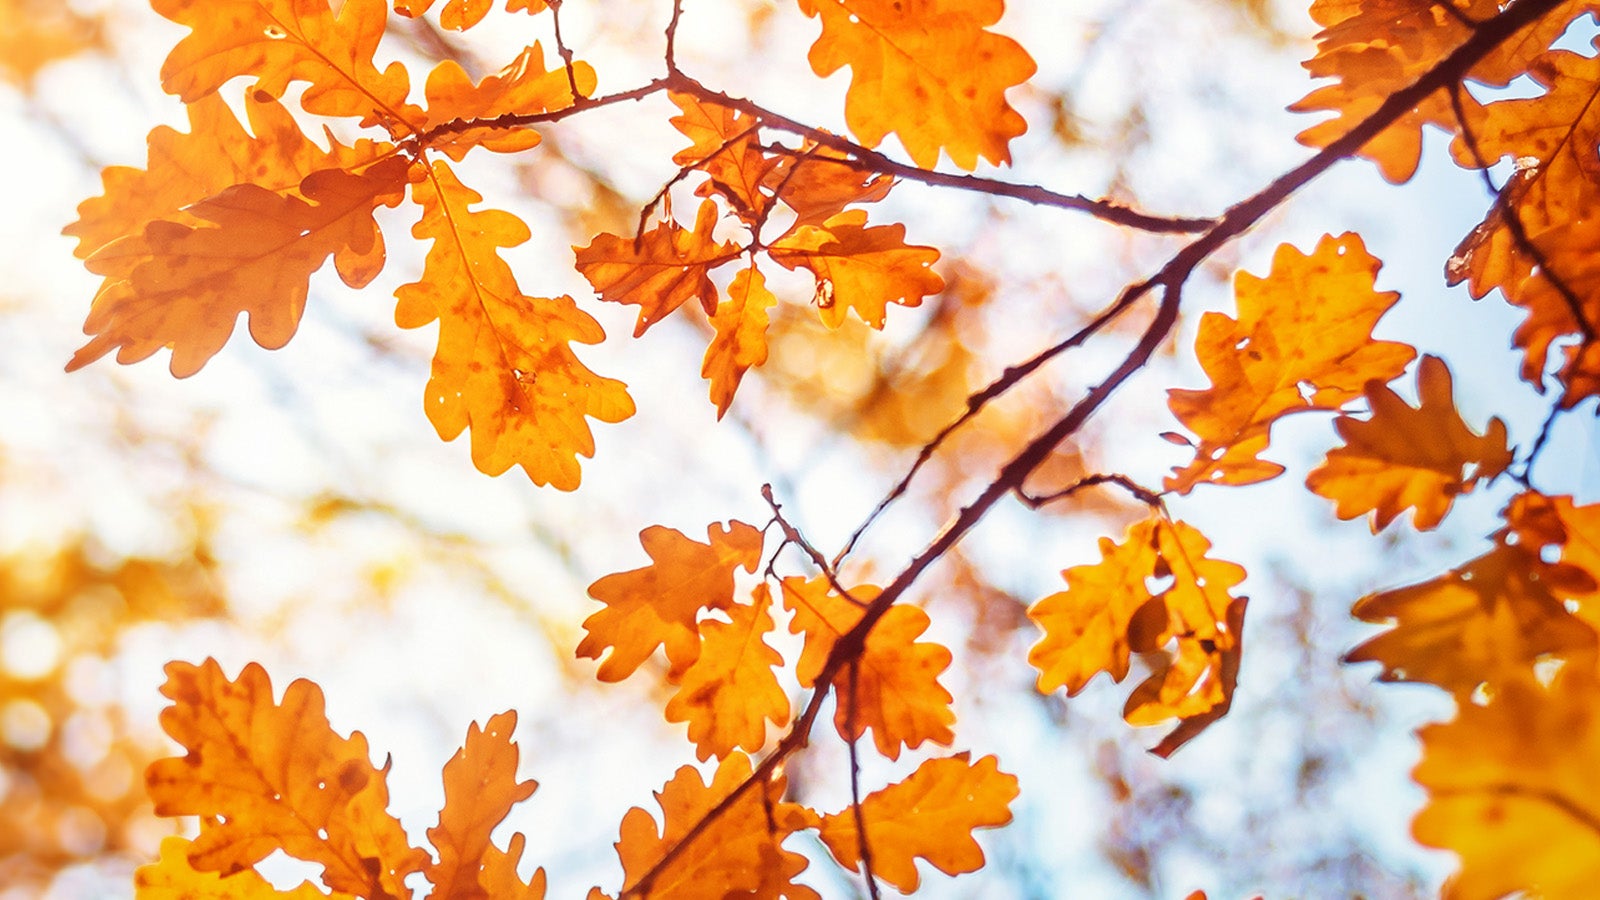 Brown oak leaves in Autumn